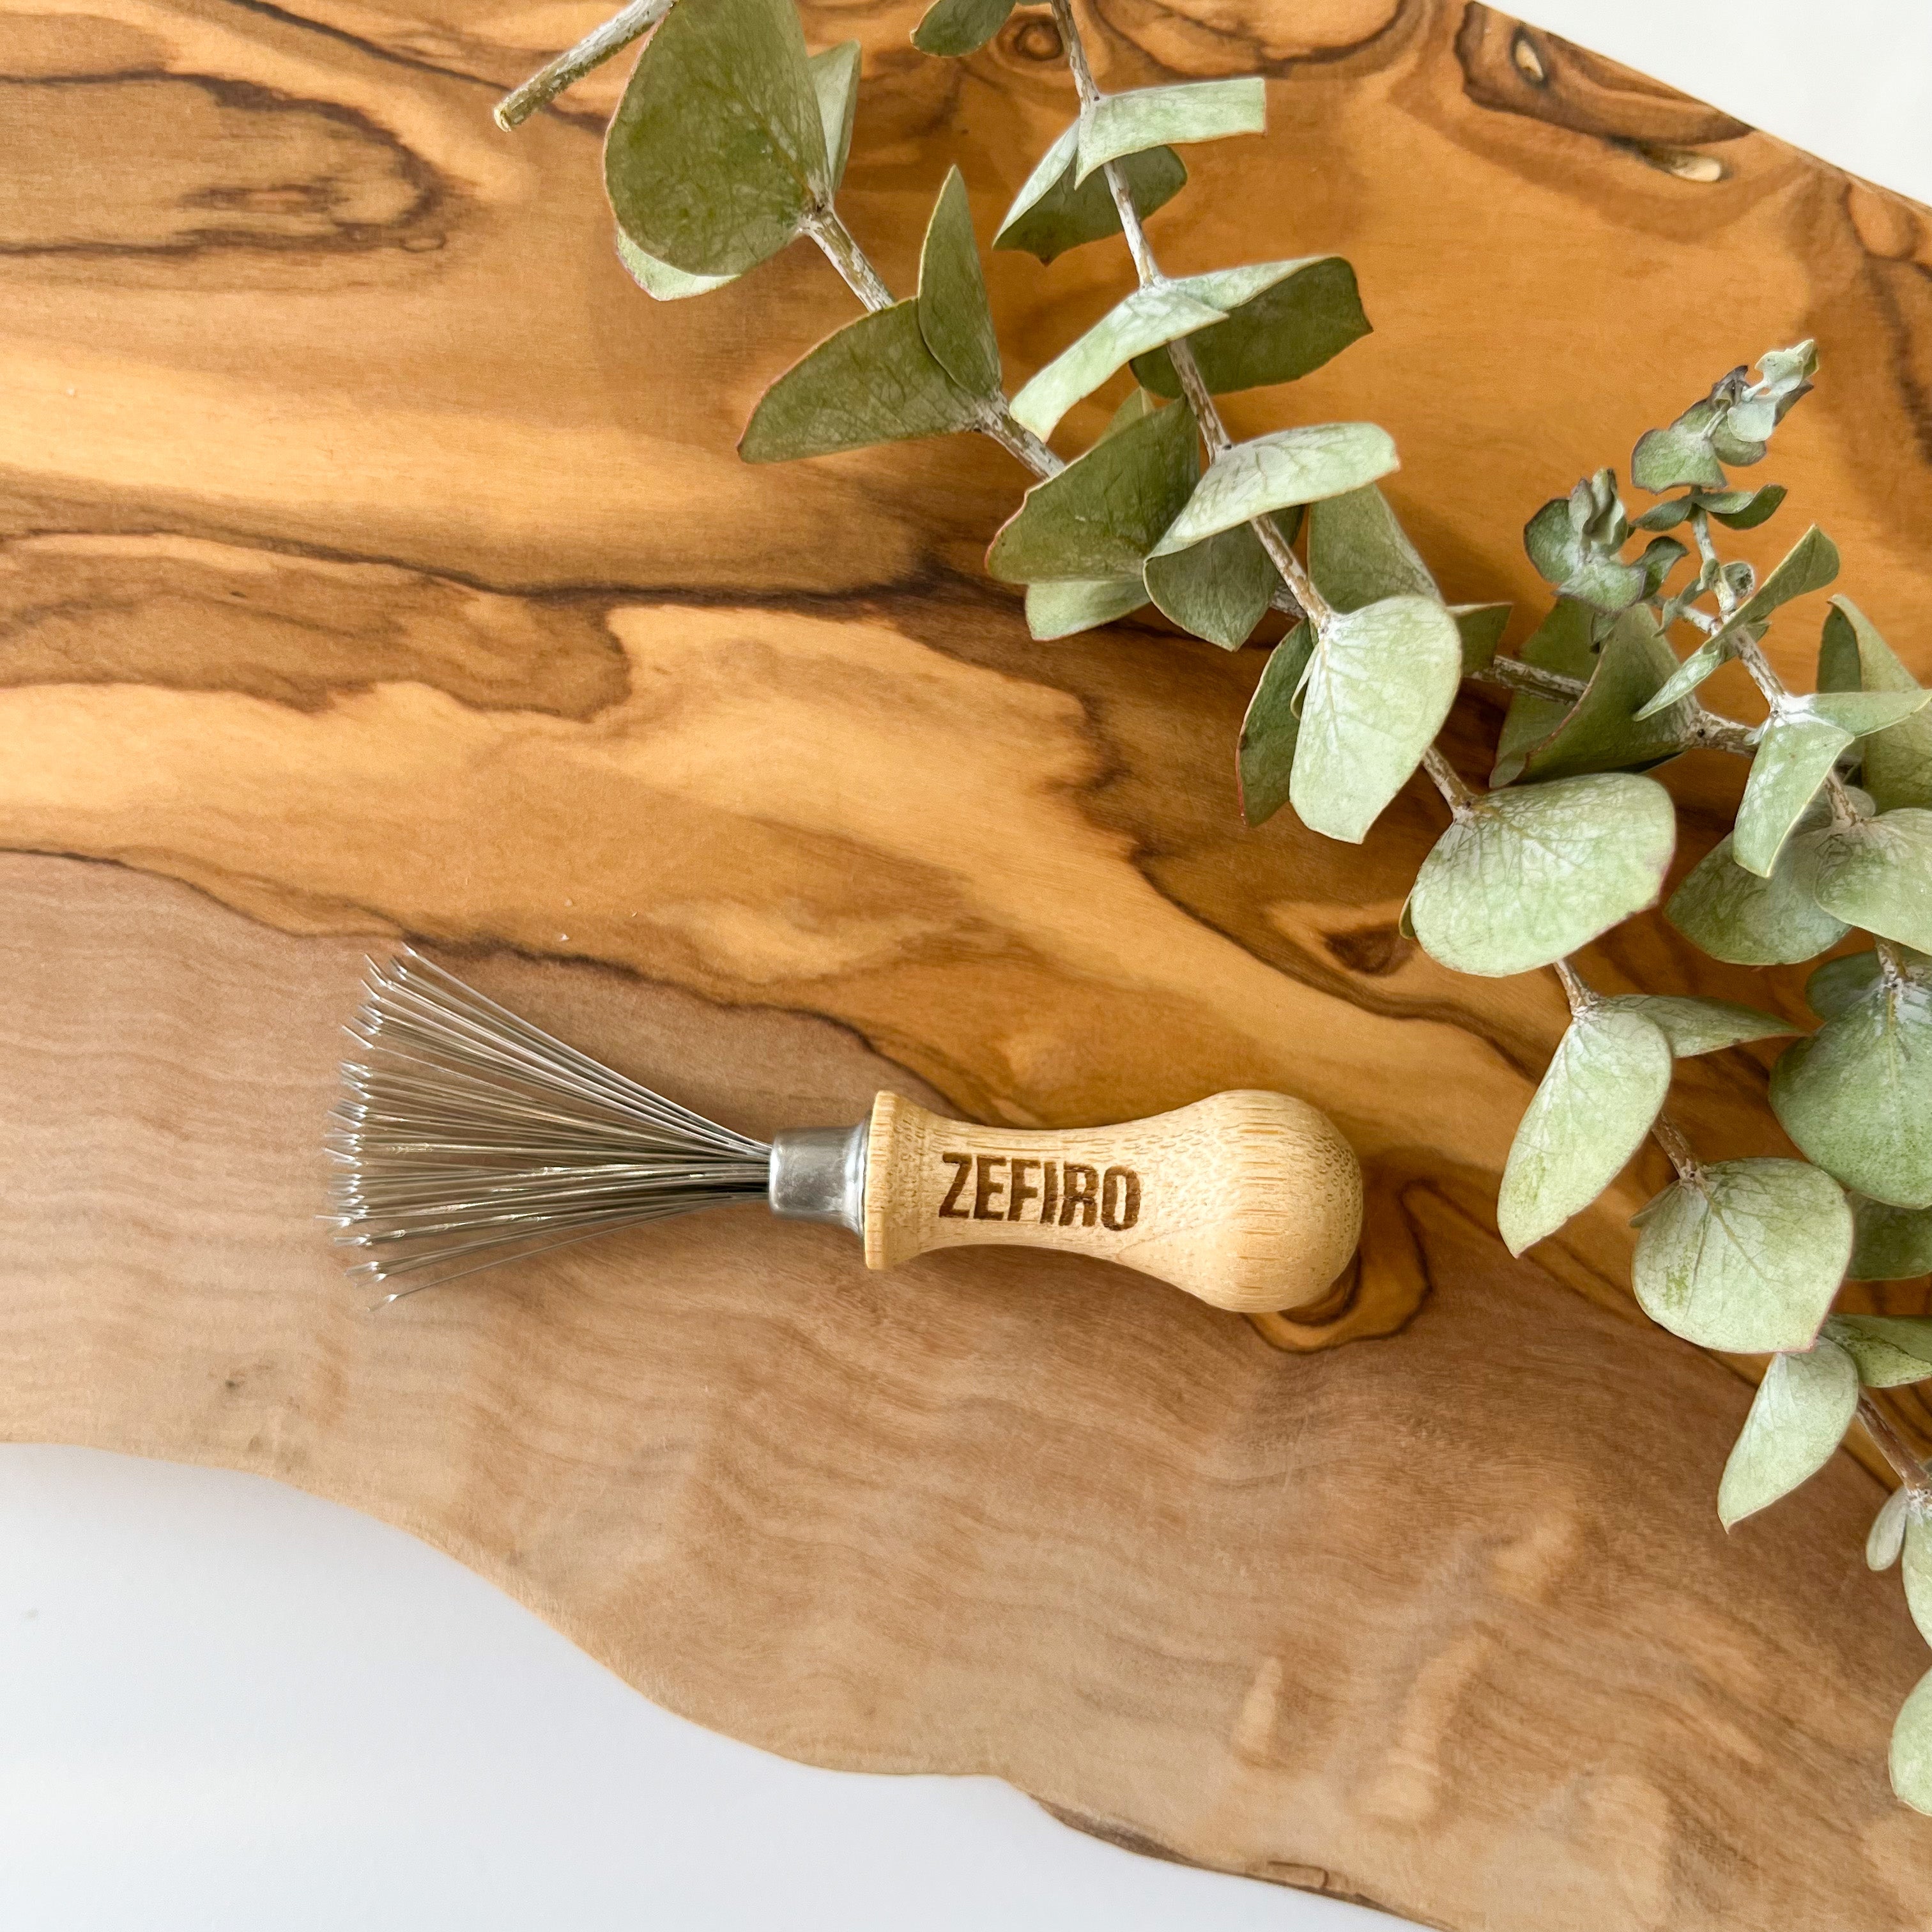 Hair Brush Cleaning Tool [Zefiro] – Indigo River & Co.